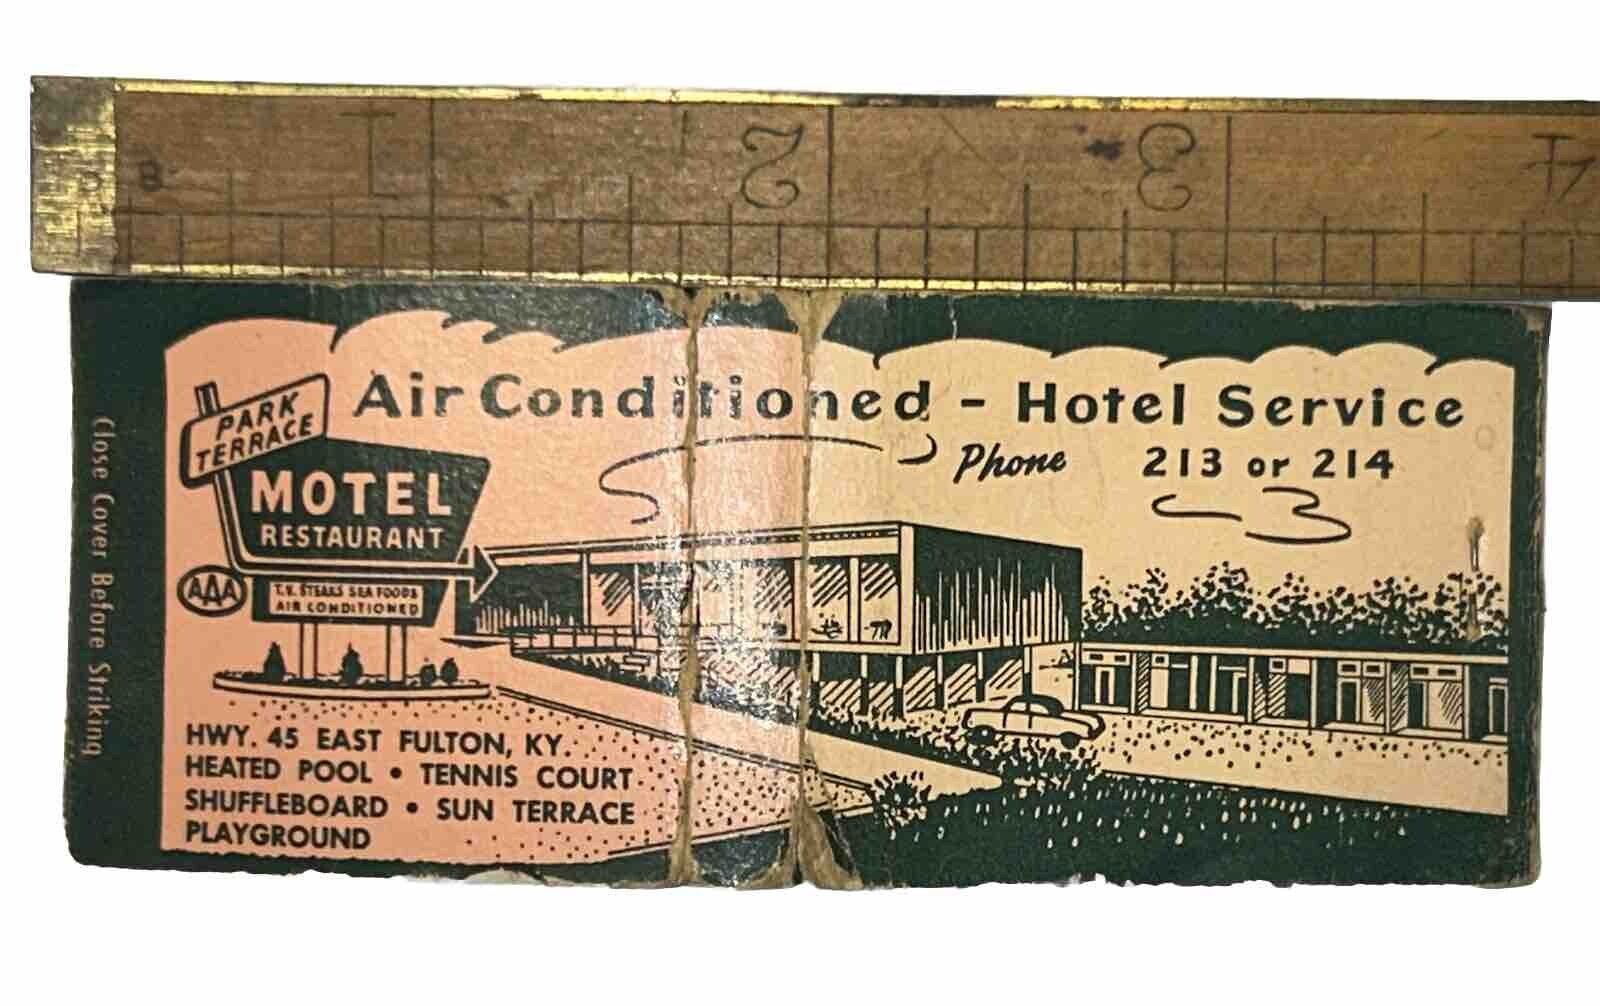 Rare Fulton Kentucky Highway Motel Hotel Restaurant Matchbook Advertising 1930's